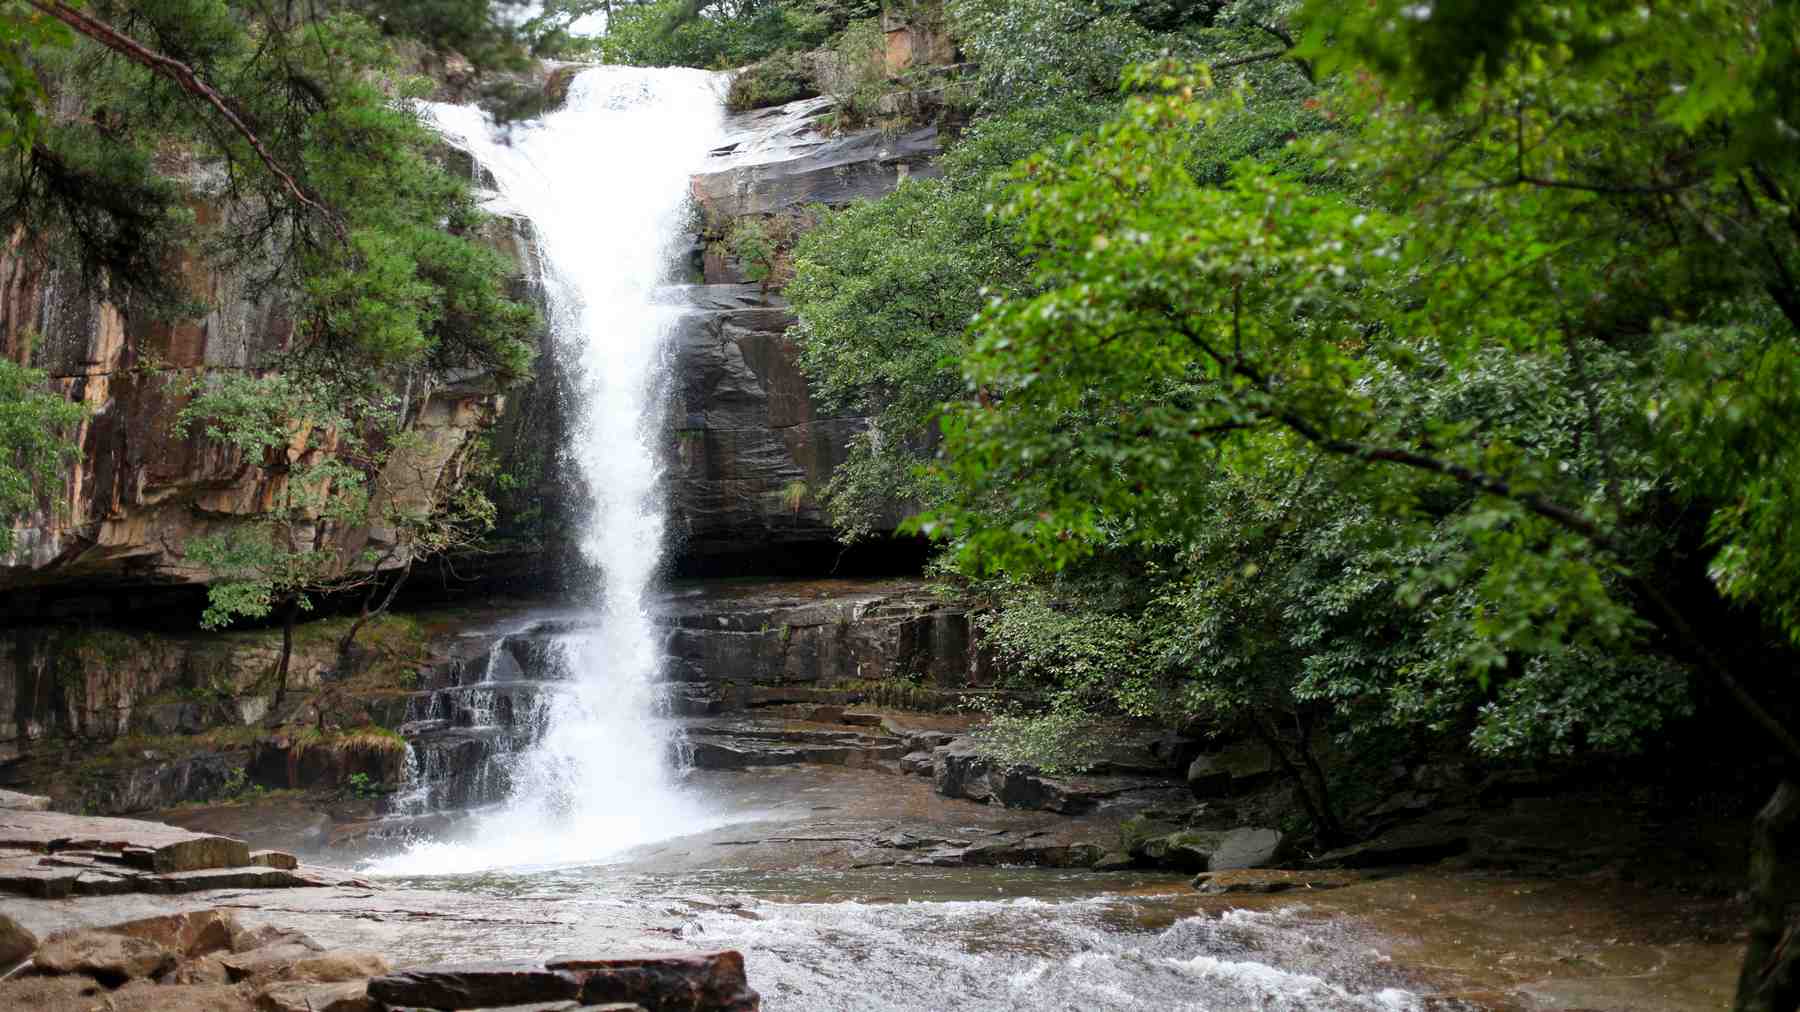 A picture of Suok Falls (수옥폭포) in Goesan County, below the Sojo Pass (소조령) on the Saejae Bike Path (새재자전거길).